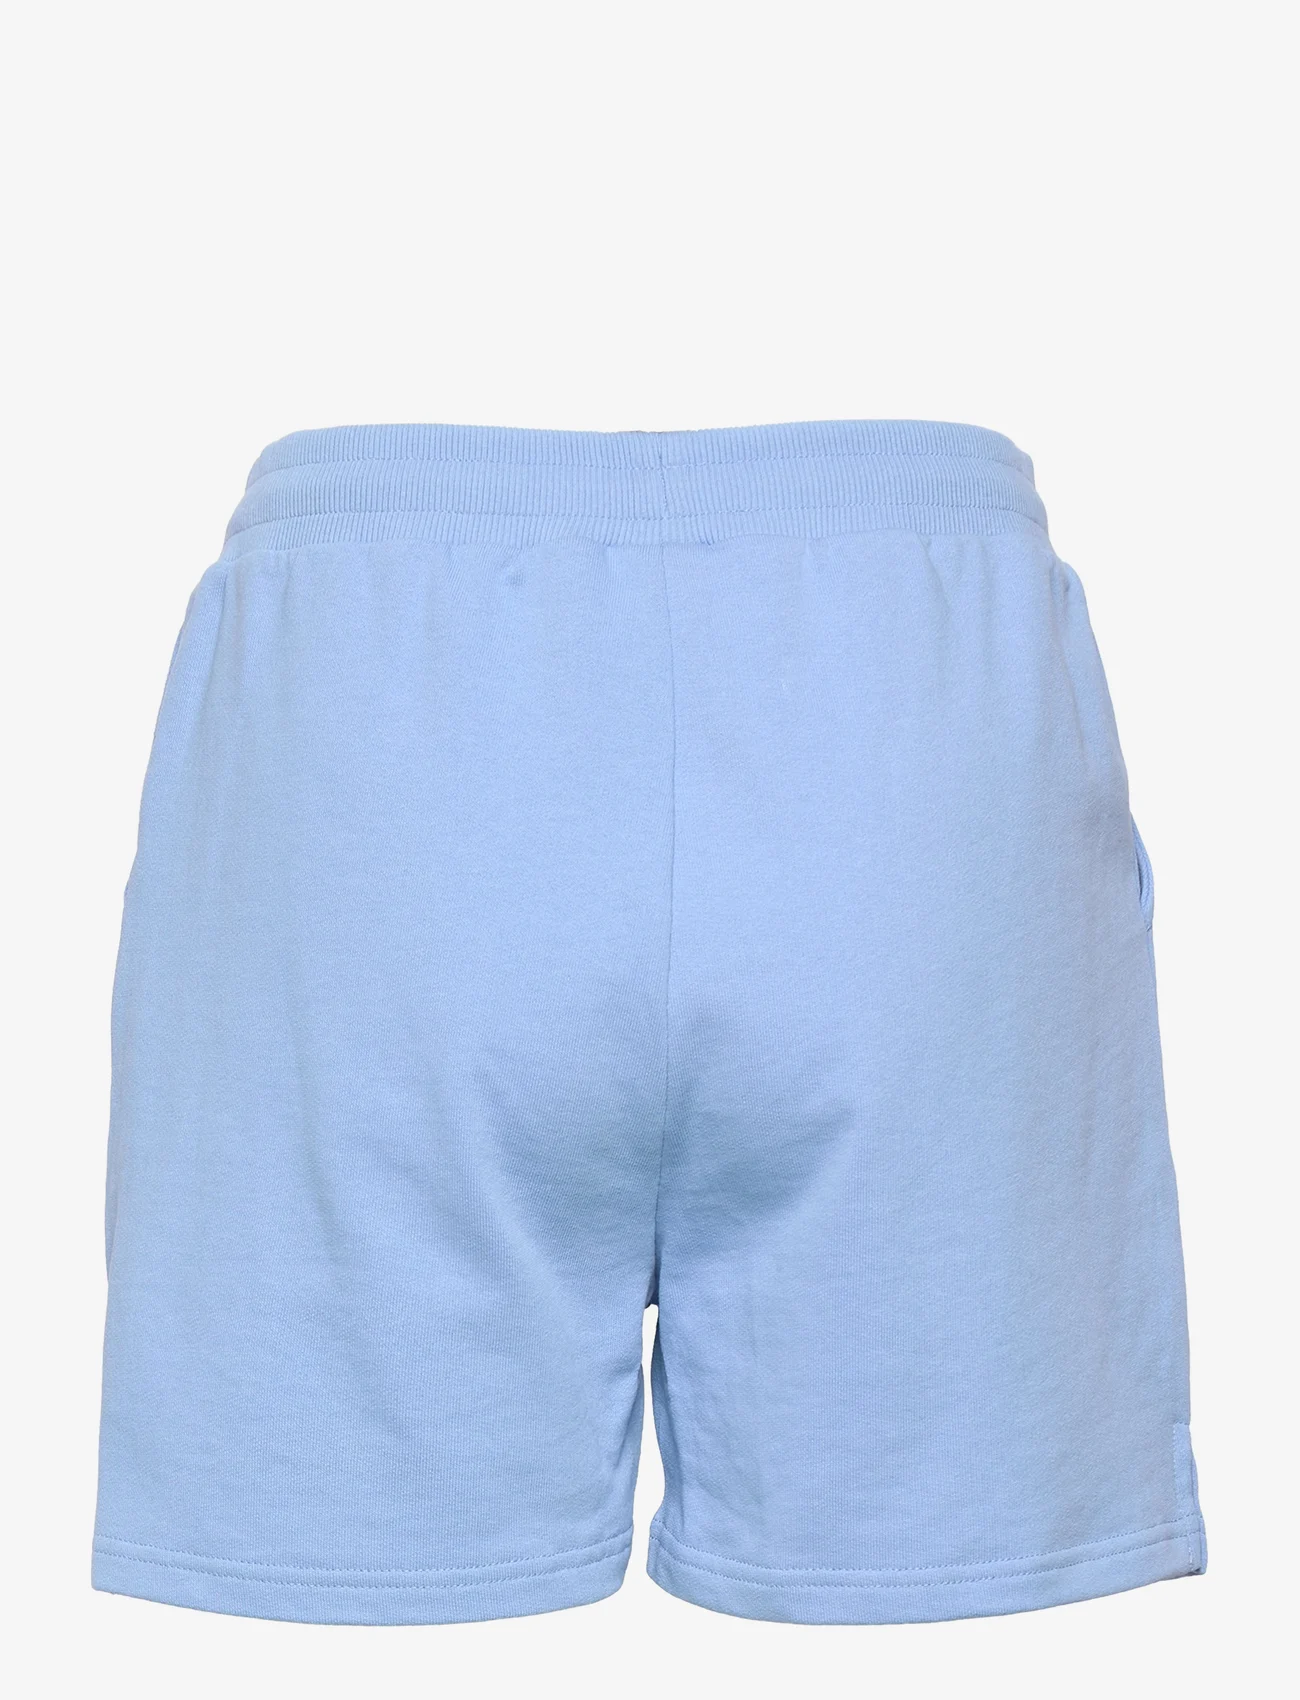 Svea - W. Sweat Shorts - collegeshortsit - light blue - 1